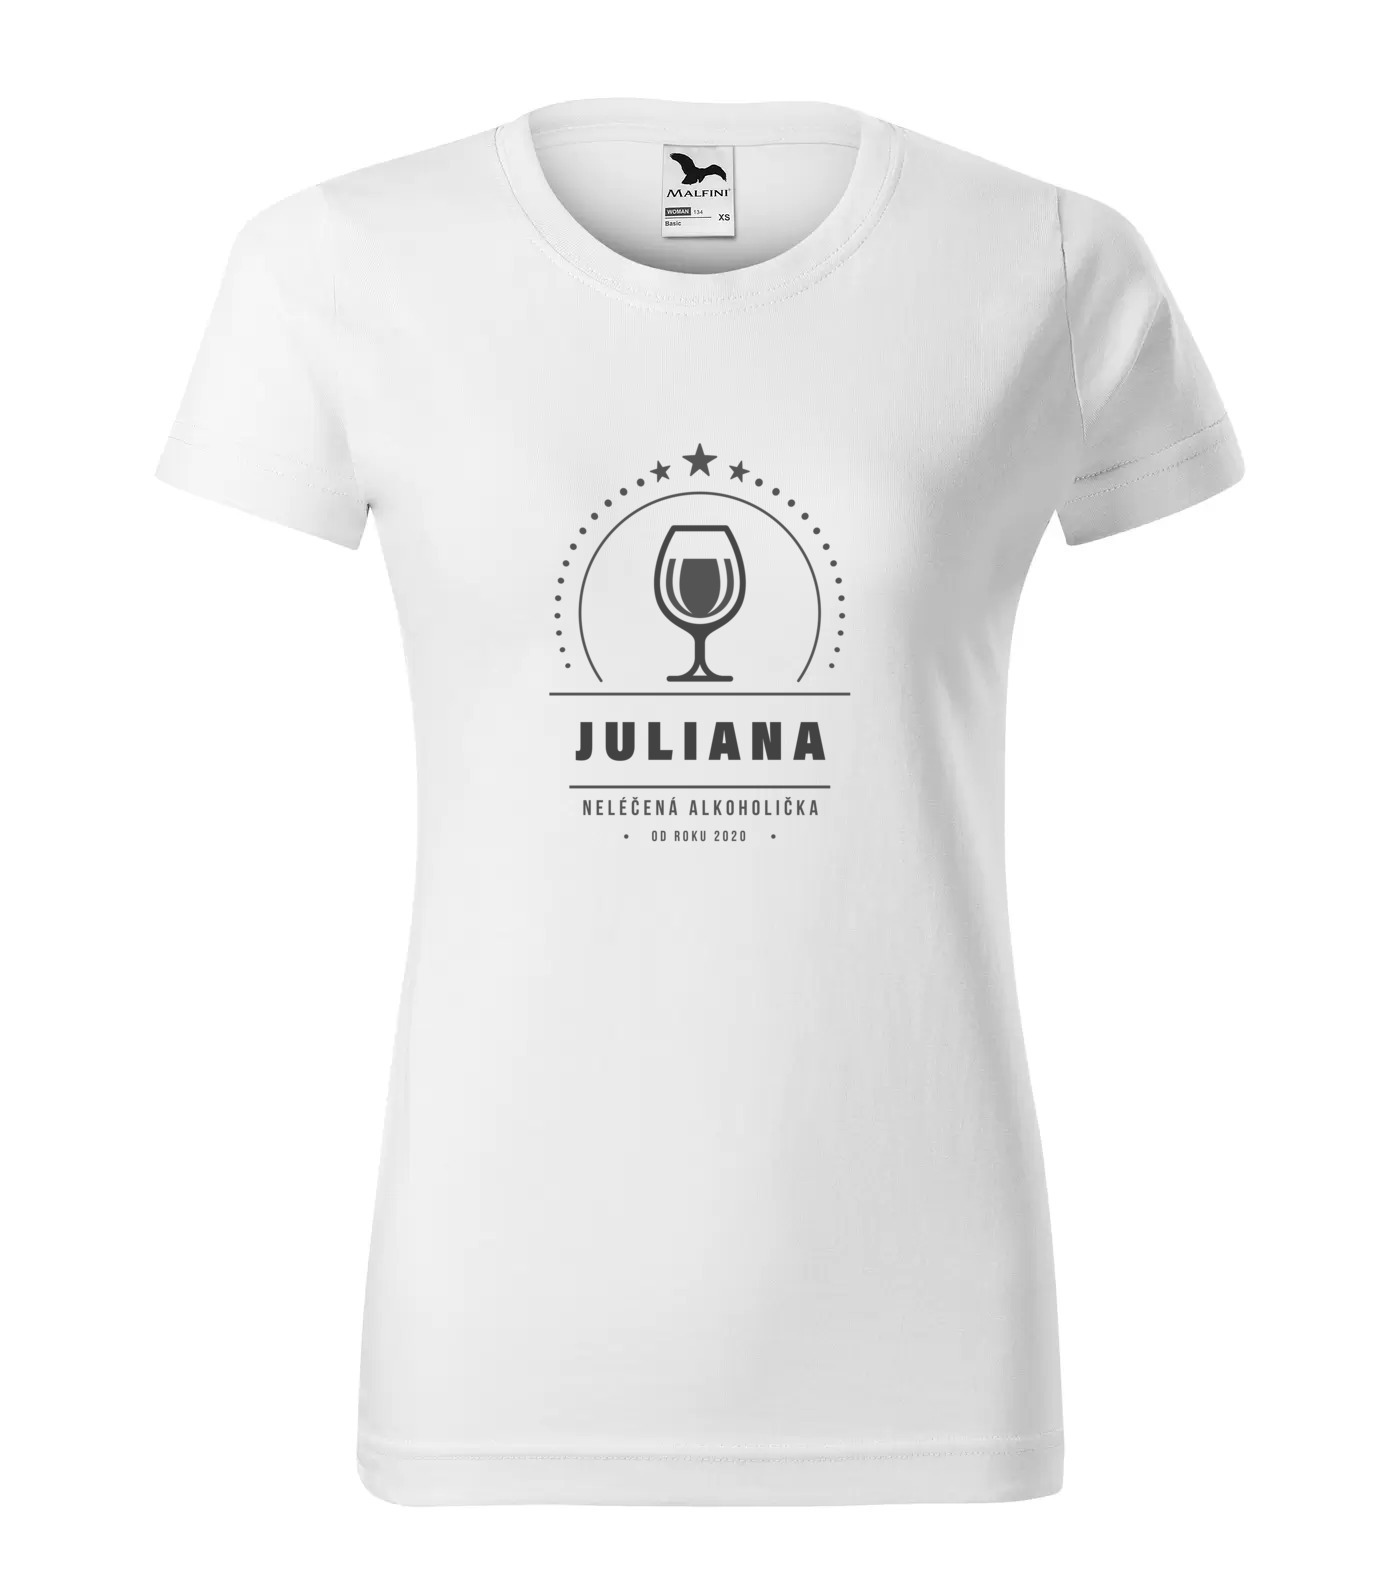 Tričko Alkoholička Juliana